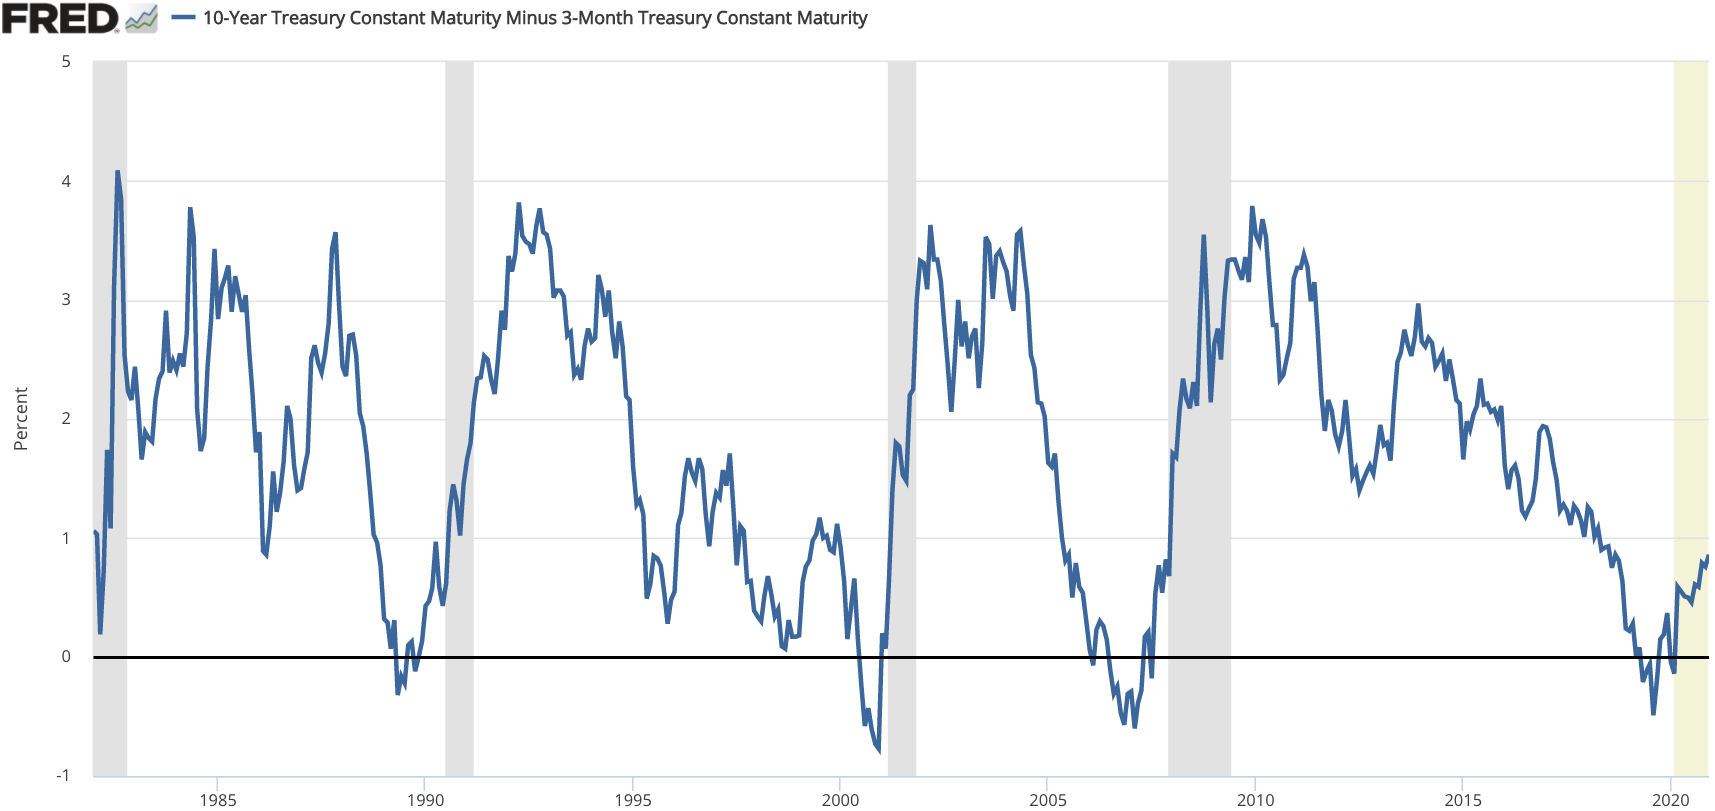 10 year treasury yield